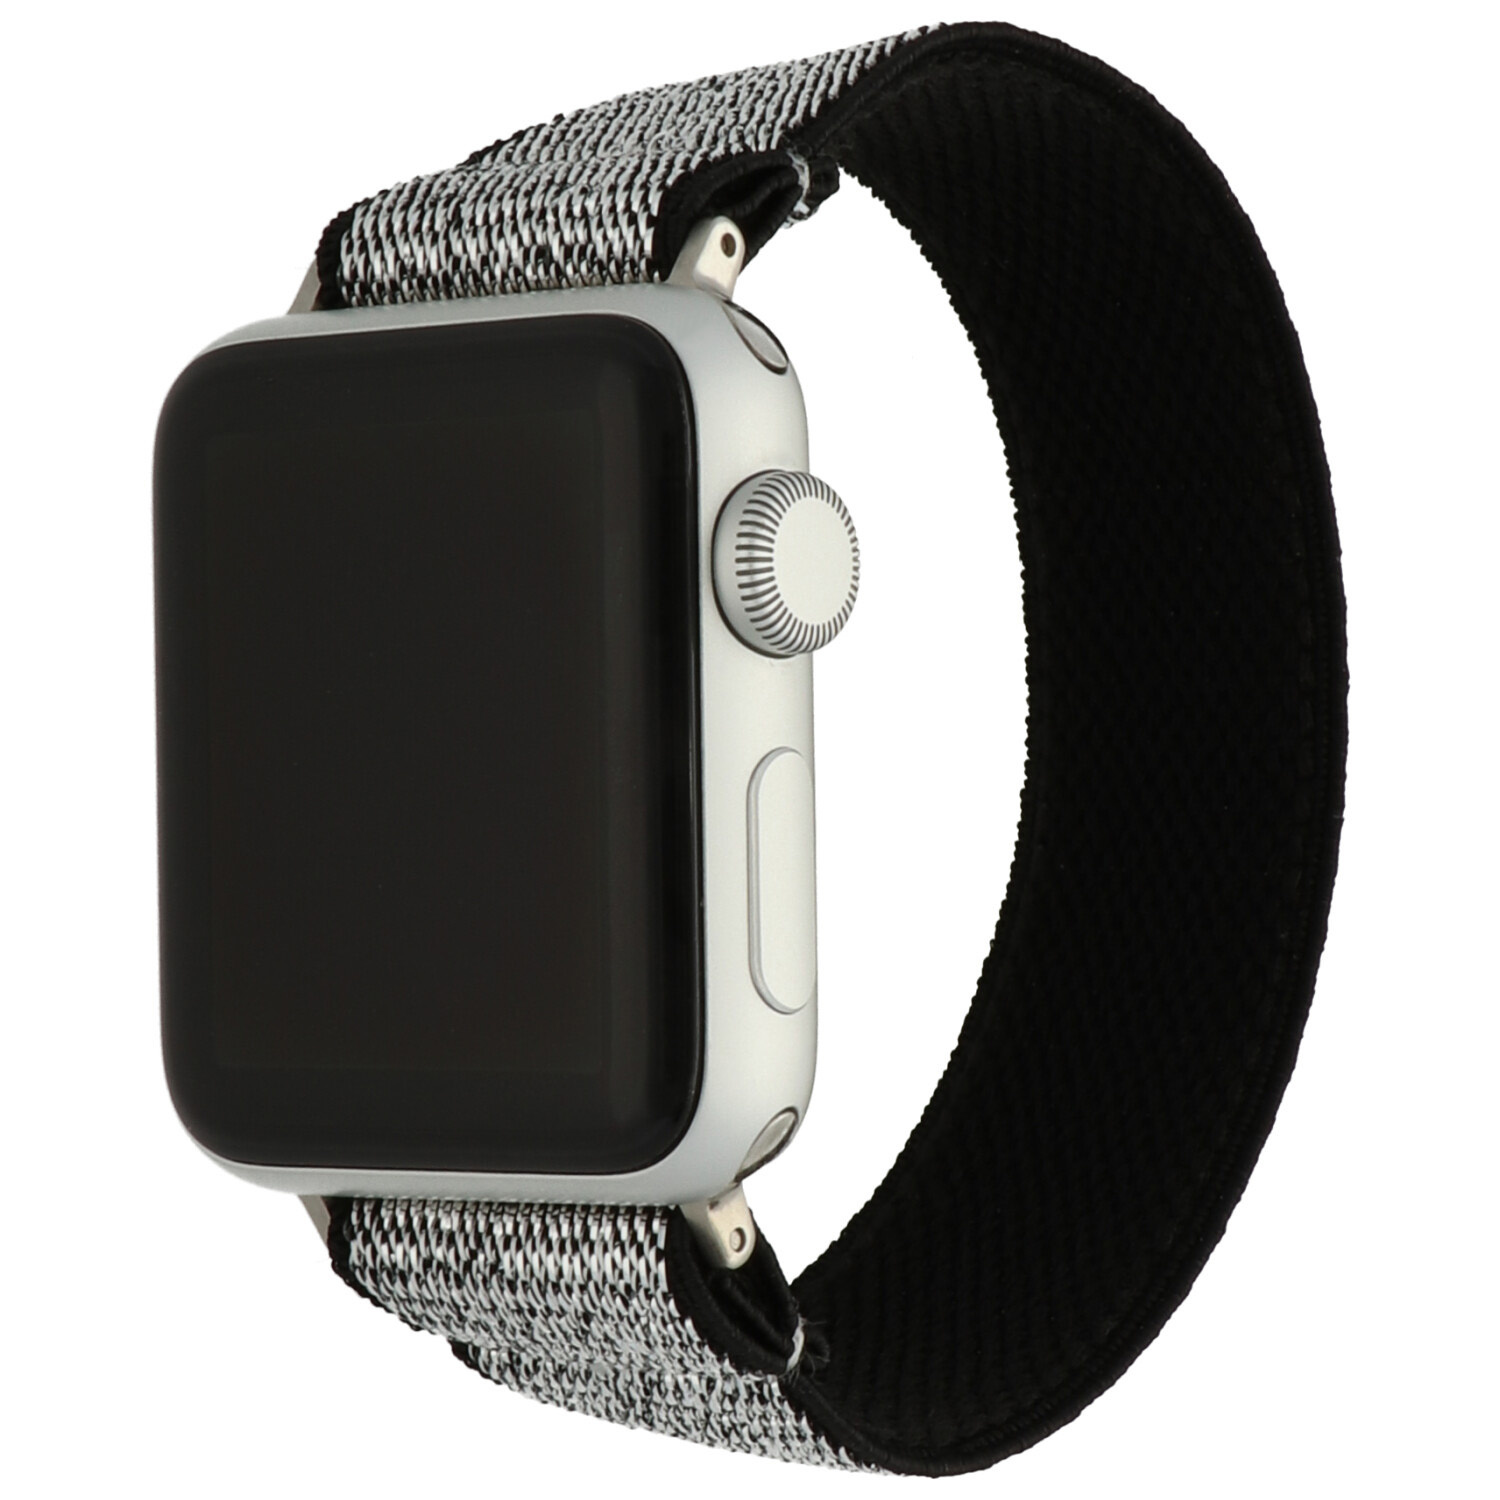 Bracelet nylon Apple Watch - argent